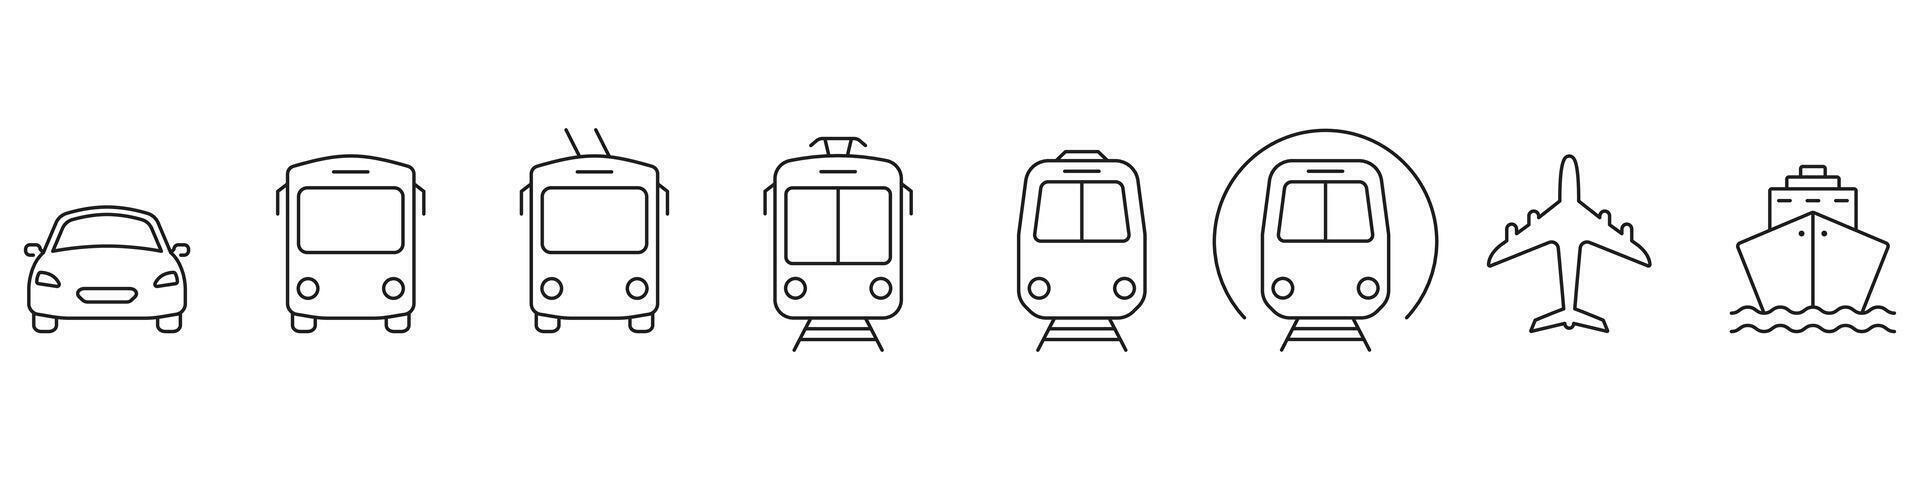 Vehicle Transport Line Icon Set. Bus, Car, Train, Plane, Ship, Bike Linear Pictogram. Traffic Sign Collection. Public Transportation Symbol. Editable Stroke. Isolated Illustration. vector